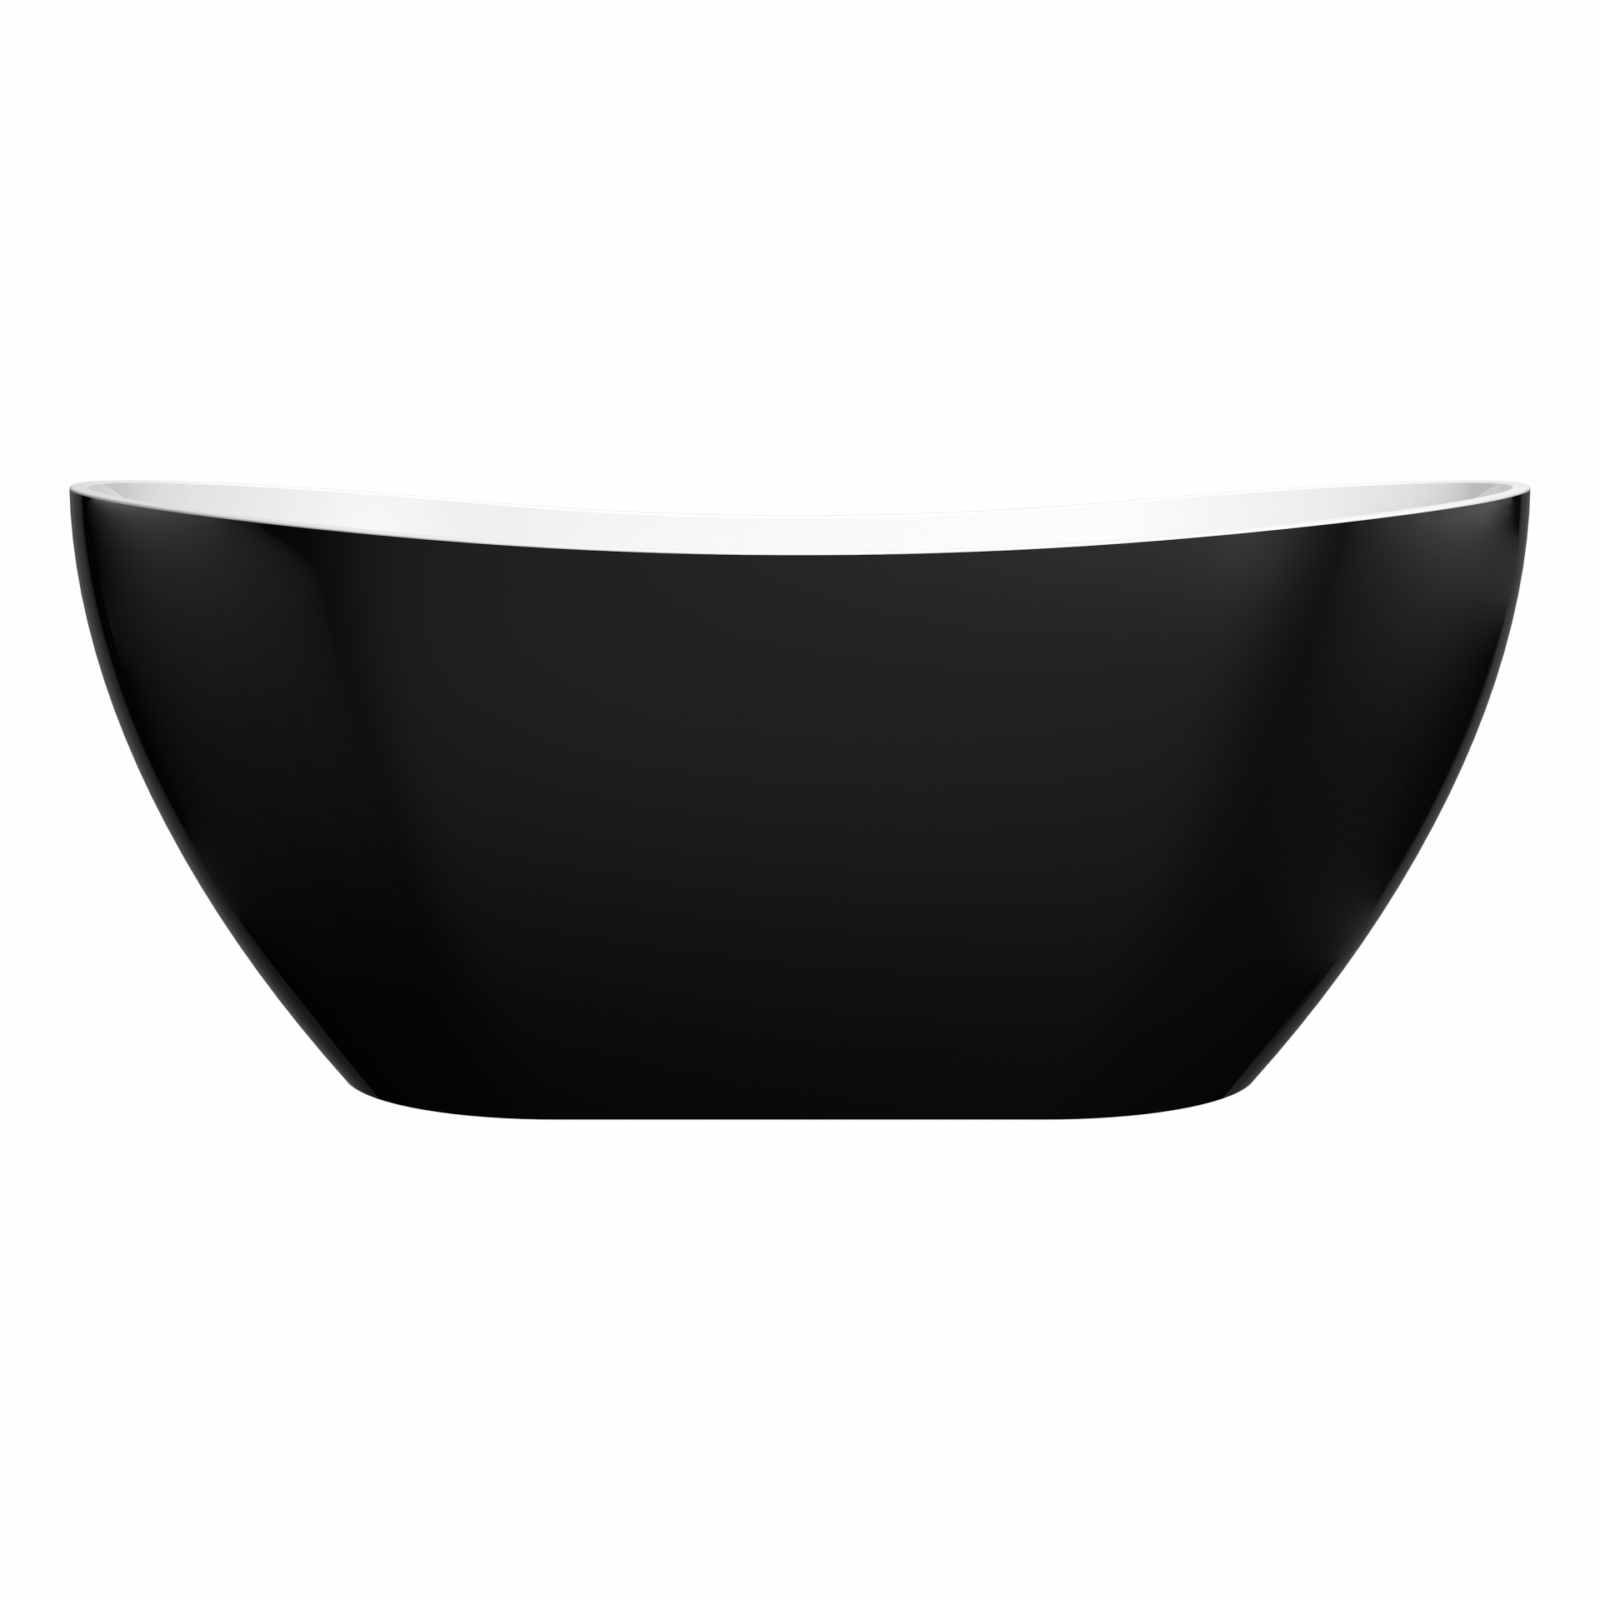 EVIE 1660mm Black Oval Freestanding Bathtub